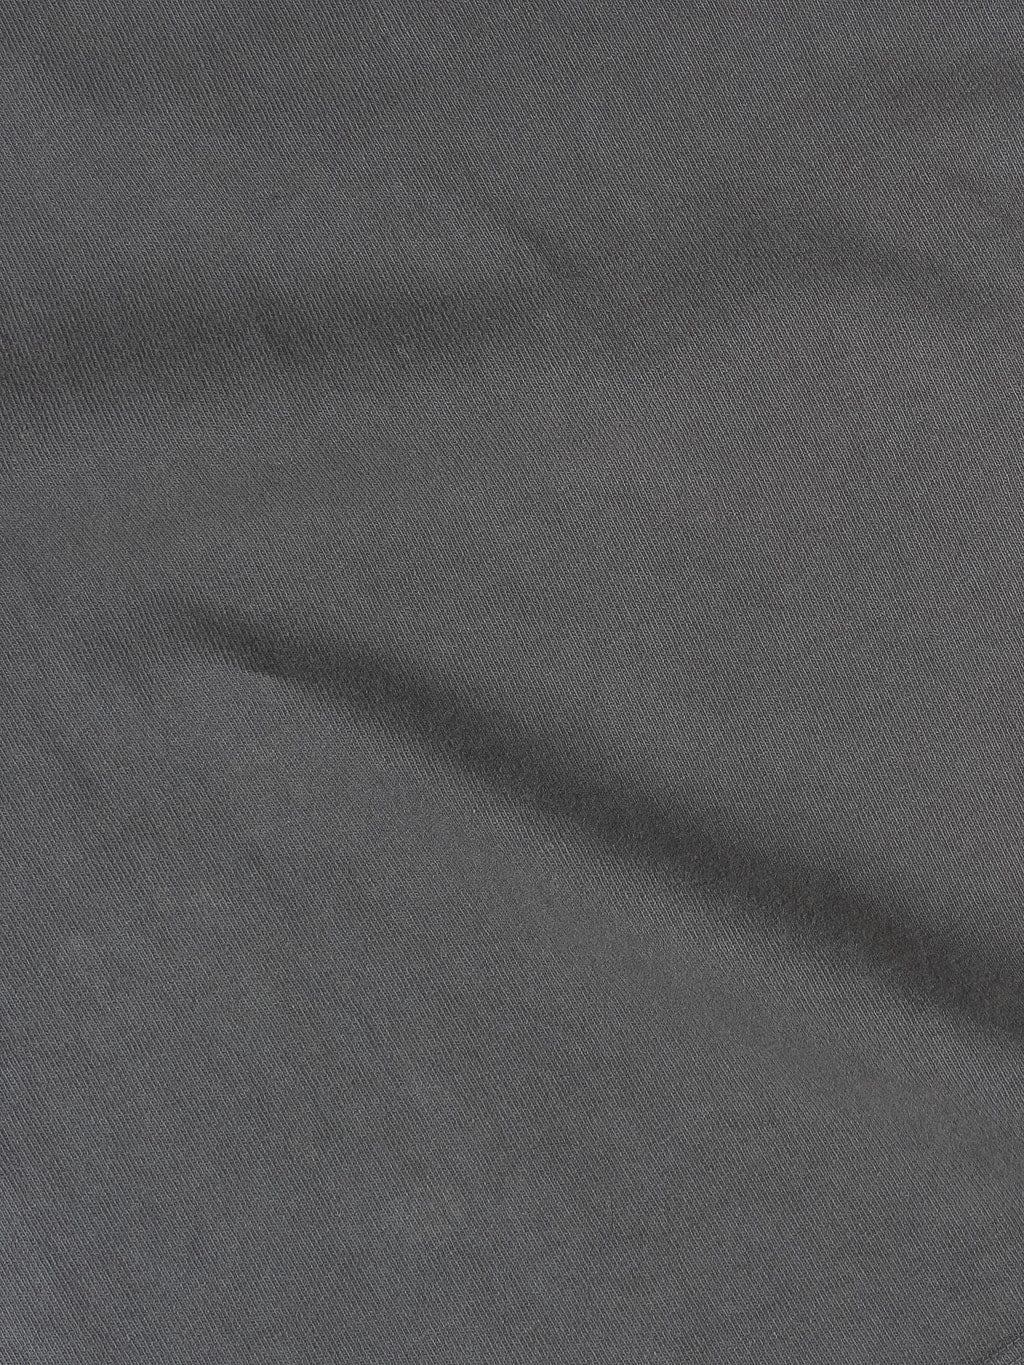 Freenote Cloth 13 Ounce Henley Long Sleeve Midnight grey fabric